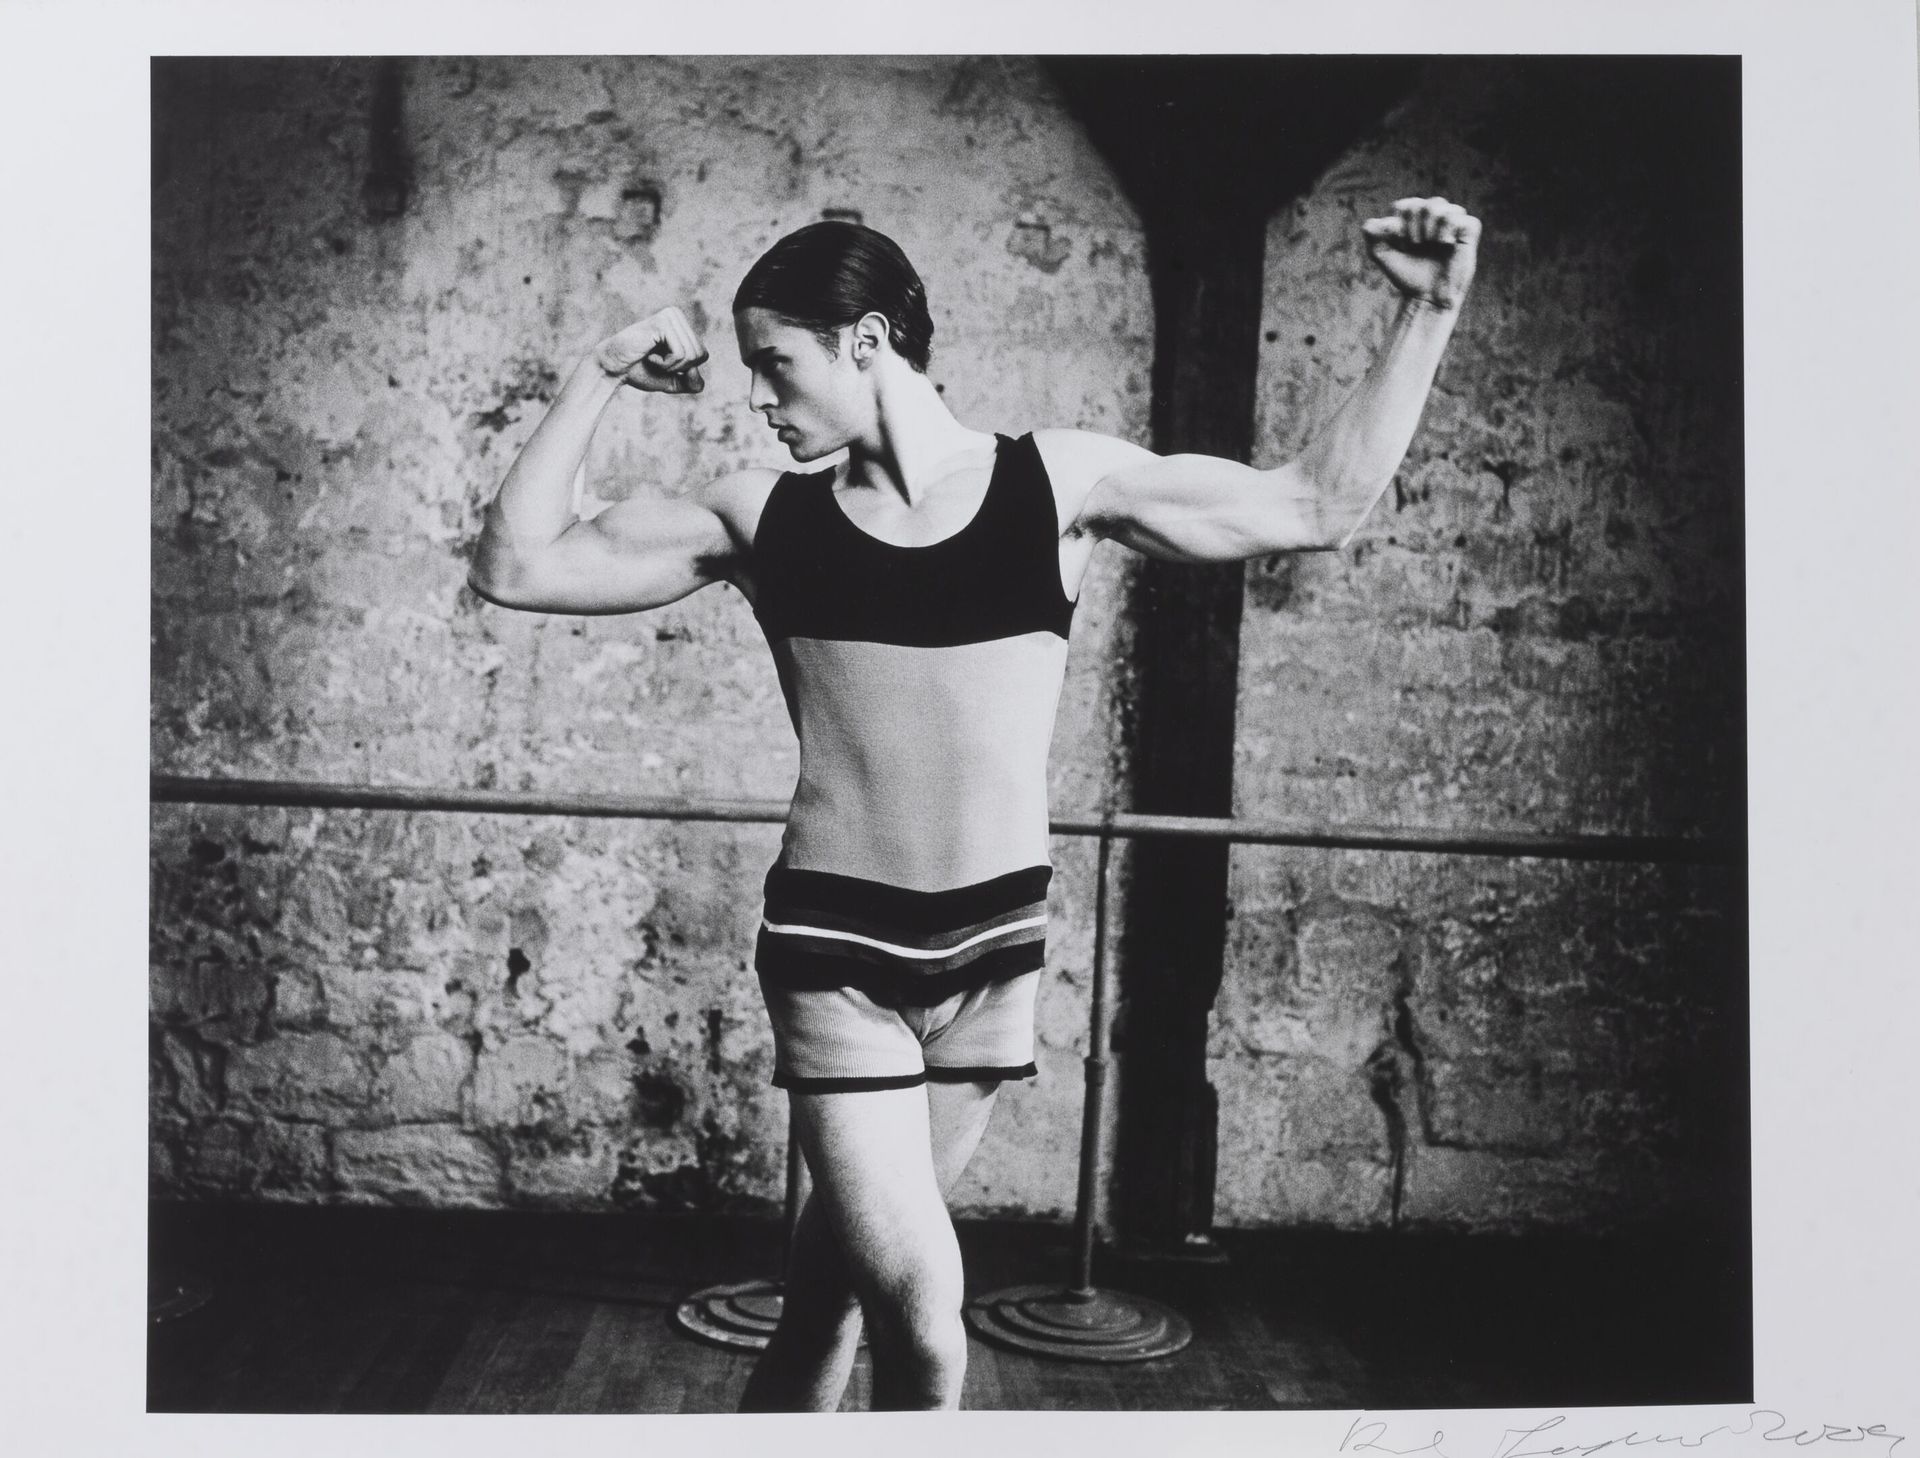 Karl LAGERFELD Baptiste GIABICONI mit muskulösen Armen. Im Profil, 2009.

Monoch&hellip;